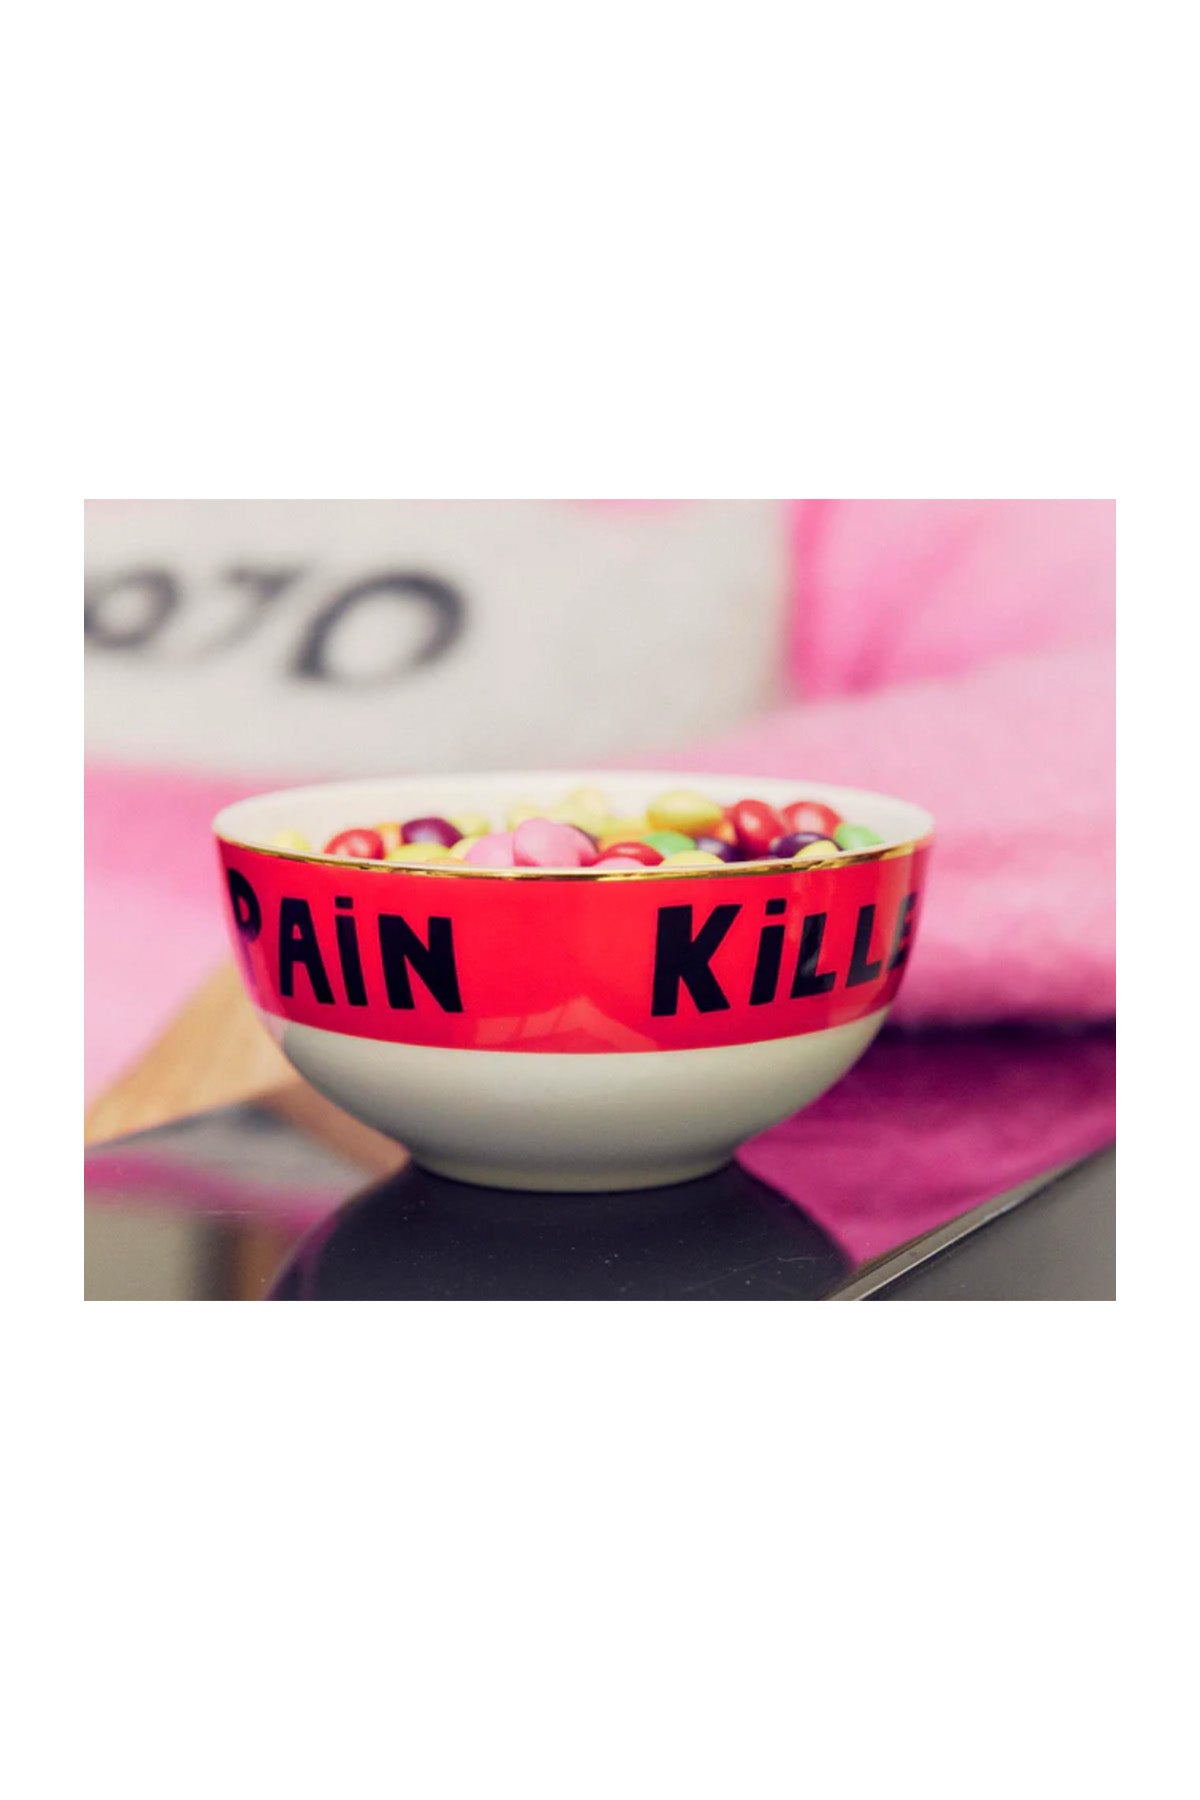 Pain Killer Sugar Bowl